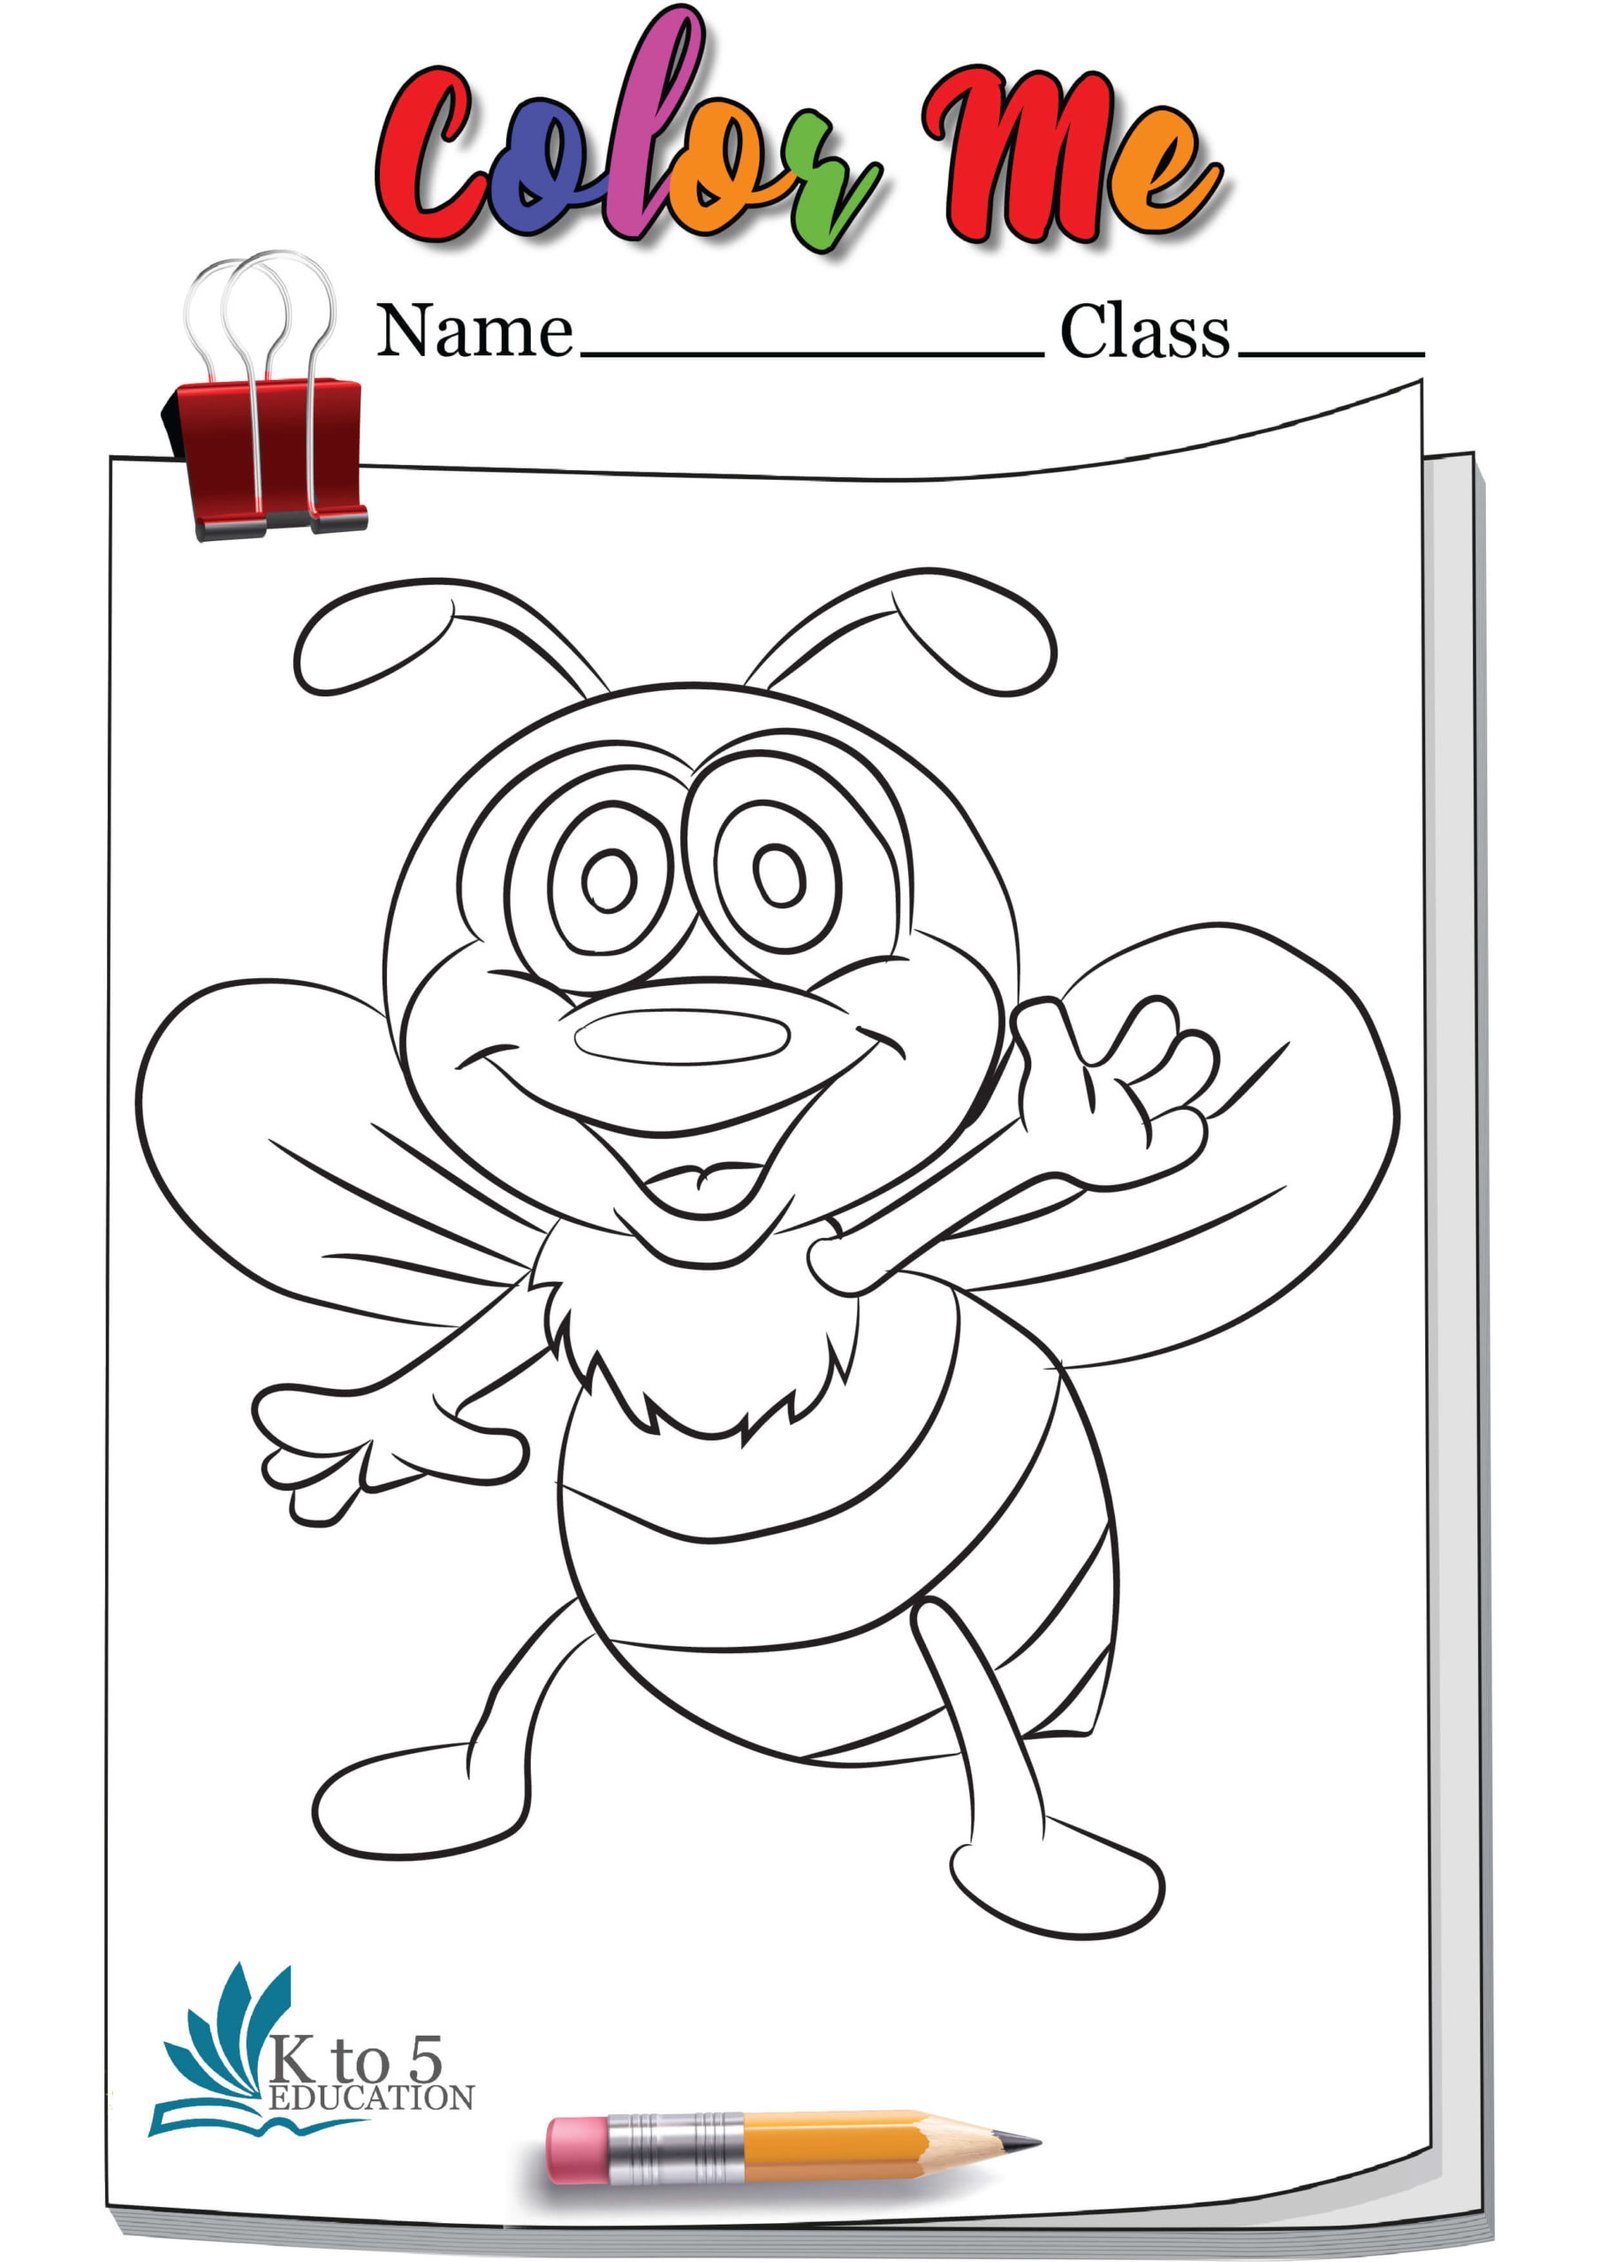 Cheerful bee coloring page workshee